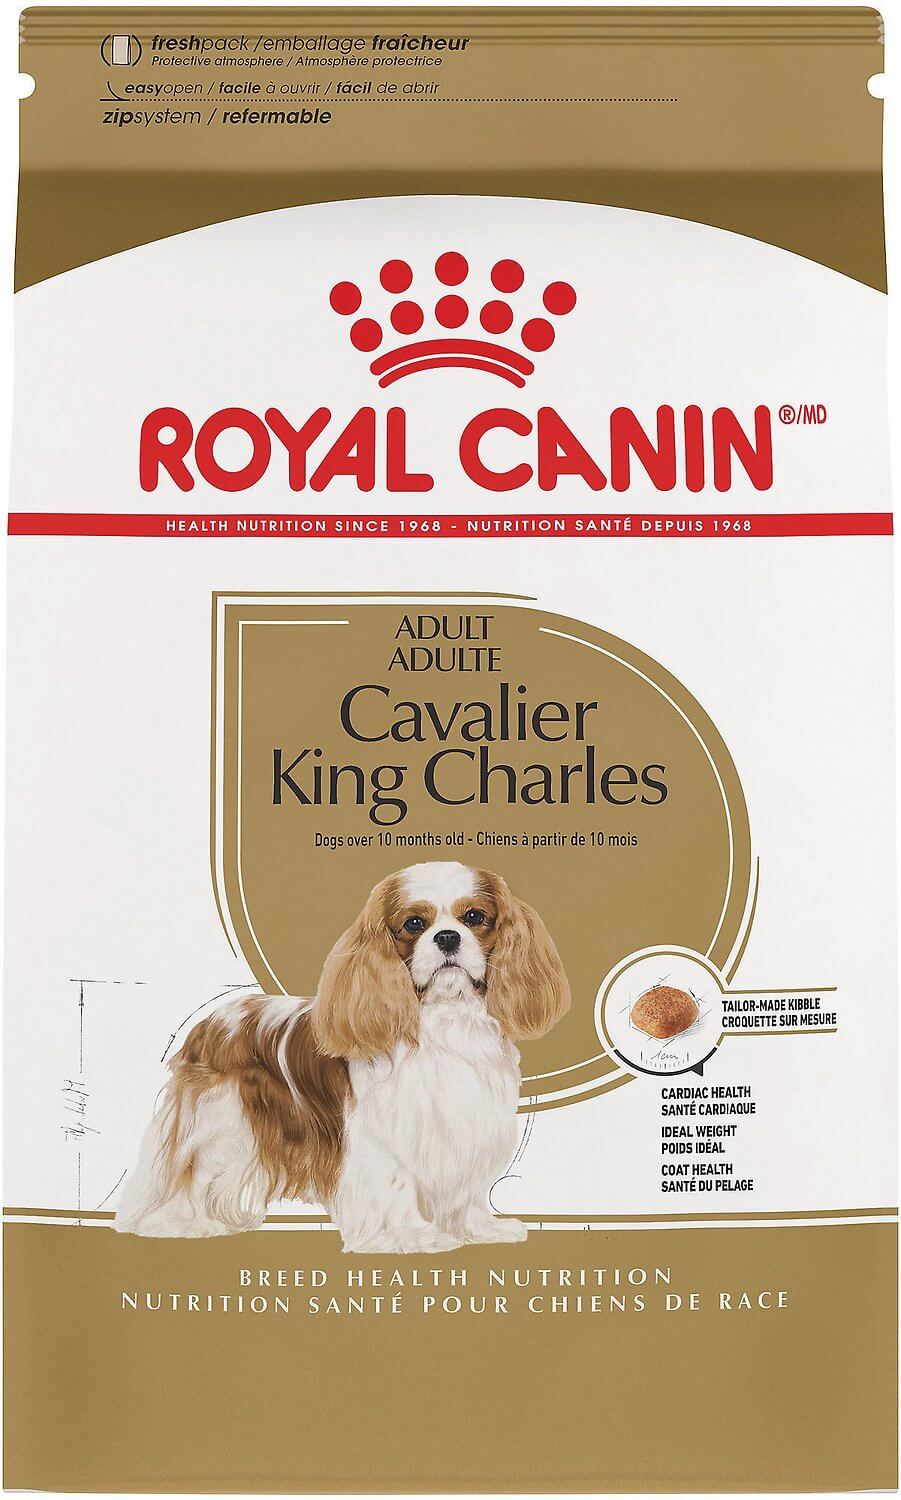 Royal Canin Dog Food Review | Recalls 